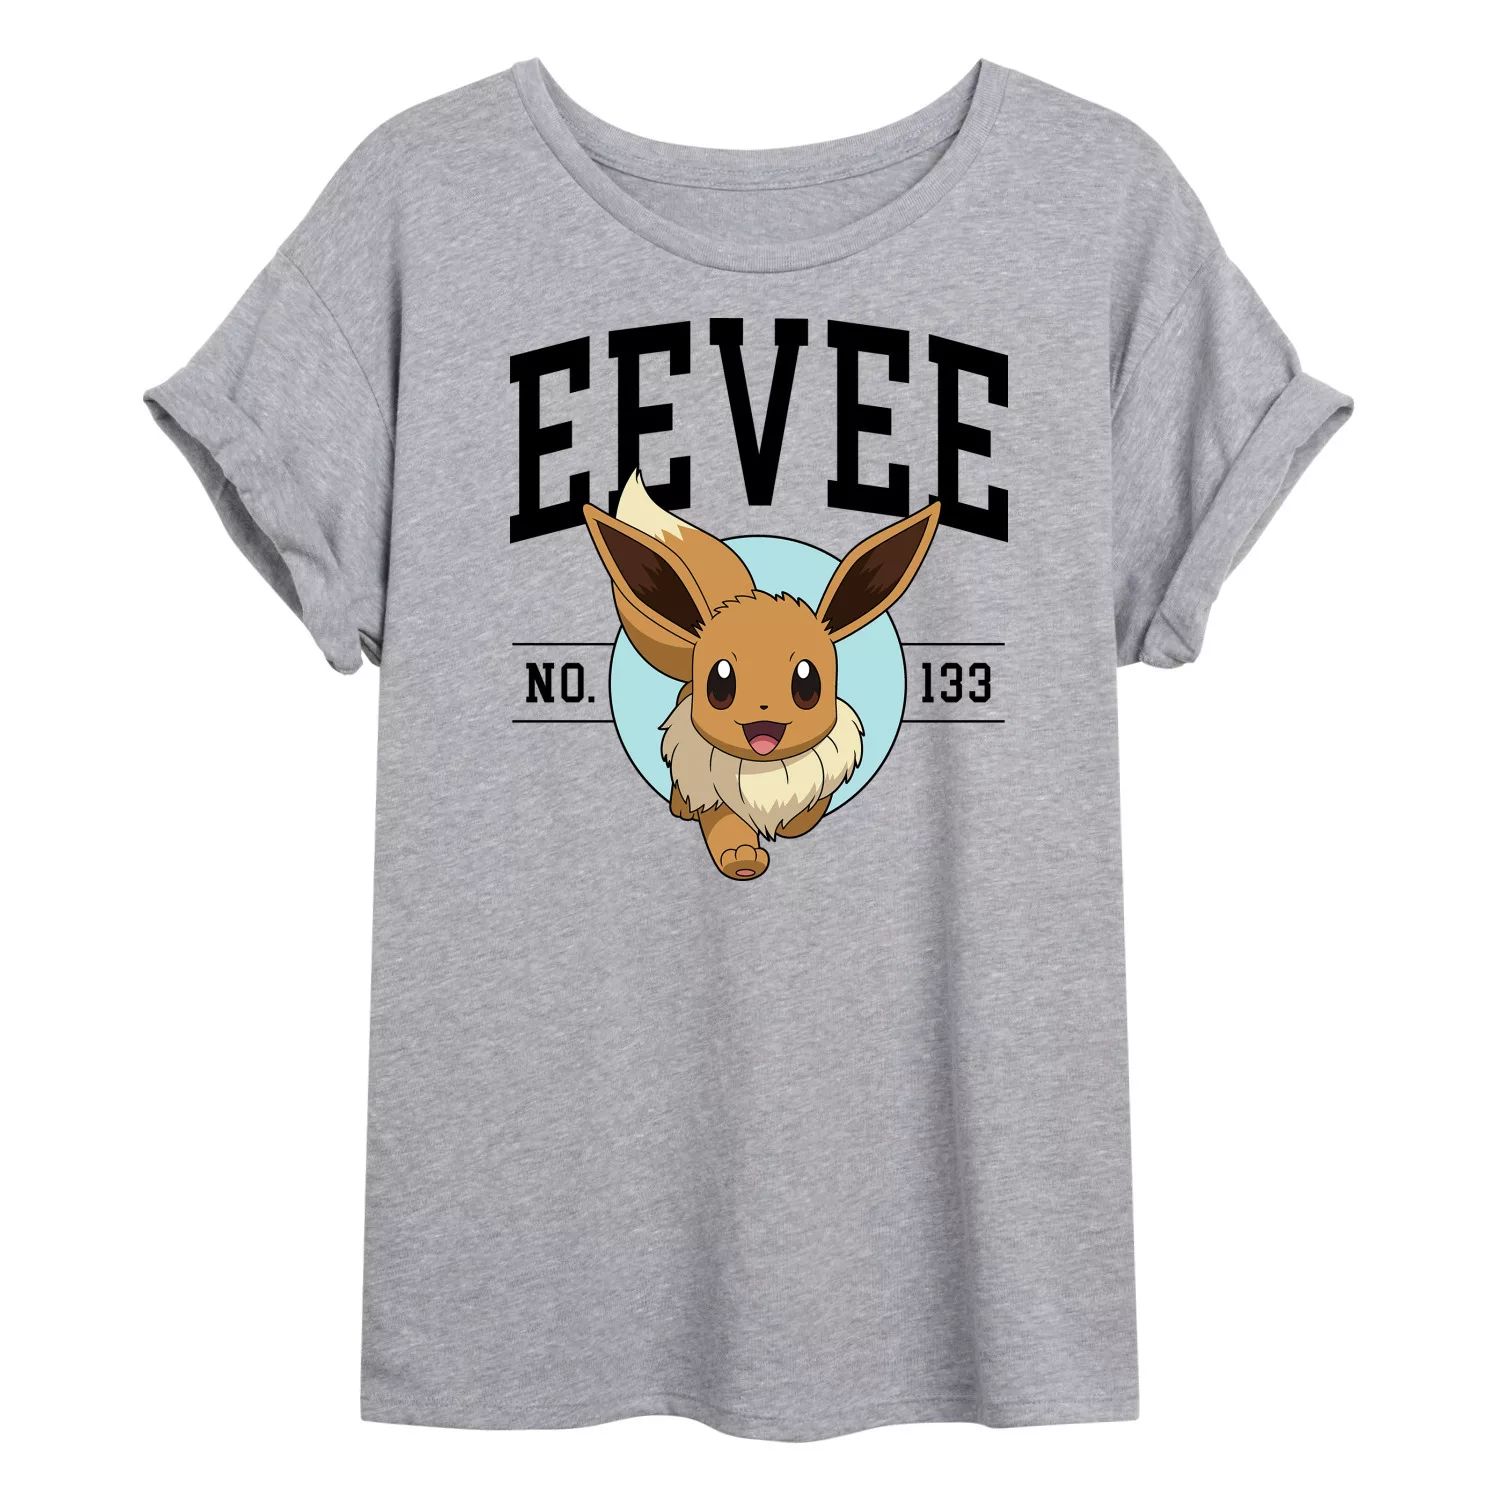 Детская струящаяся футболка Pokemon Eevee Licensed Character набор pokemon фигурка eevee футболка obstagoon punk xl